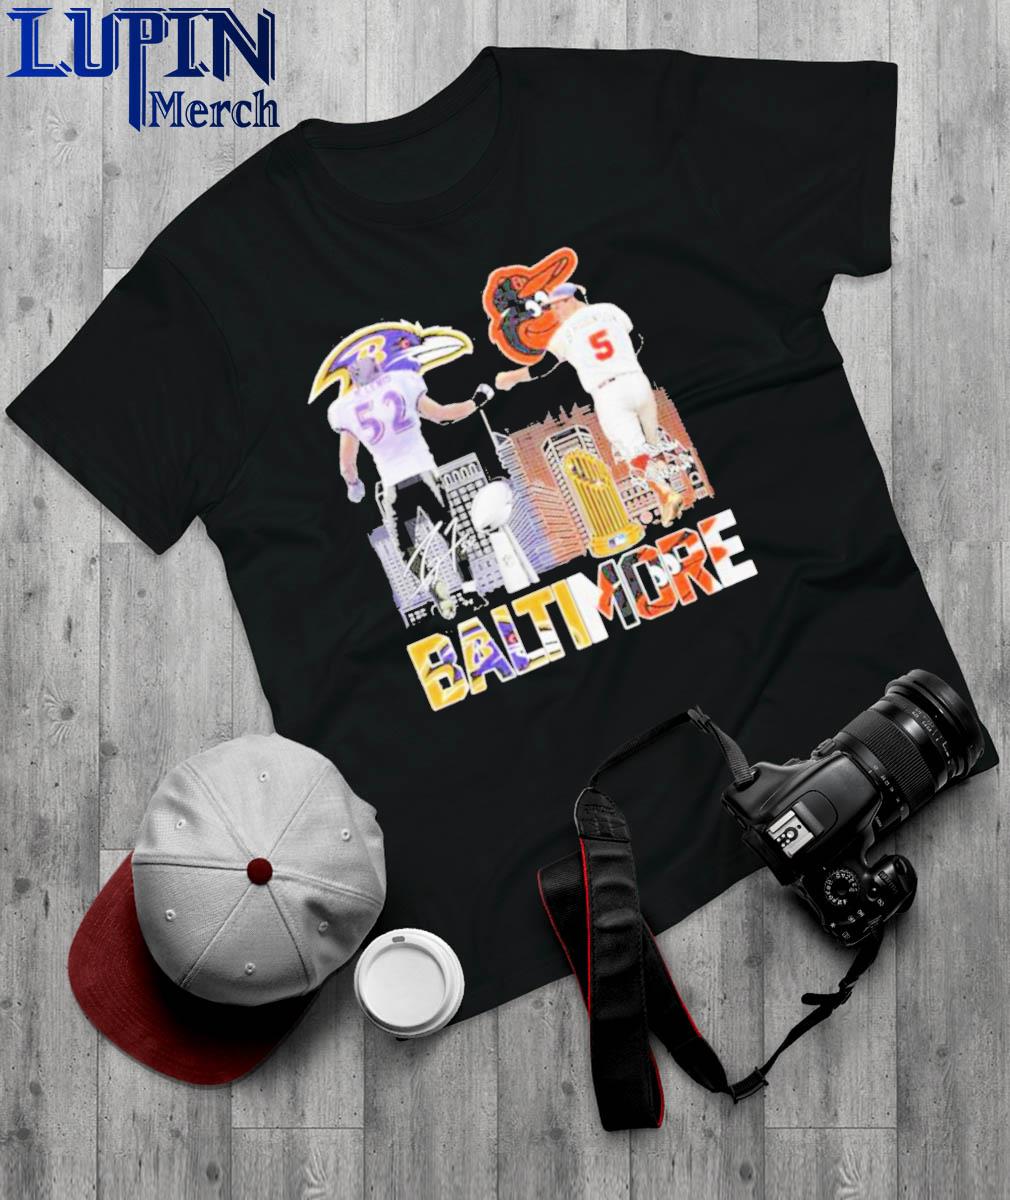 Official Baltimore ravens and baltimore orioles logo T-shirt